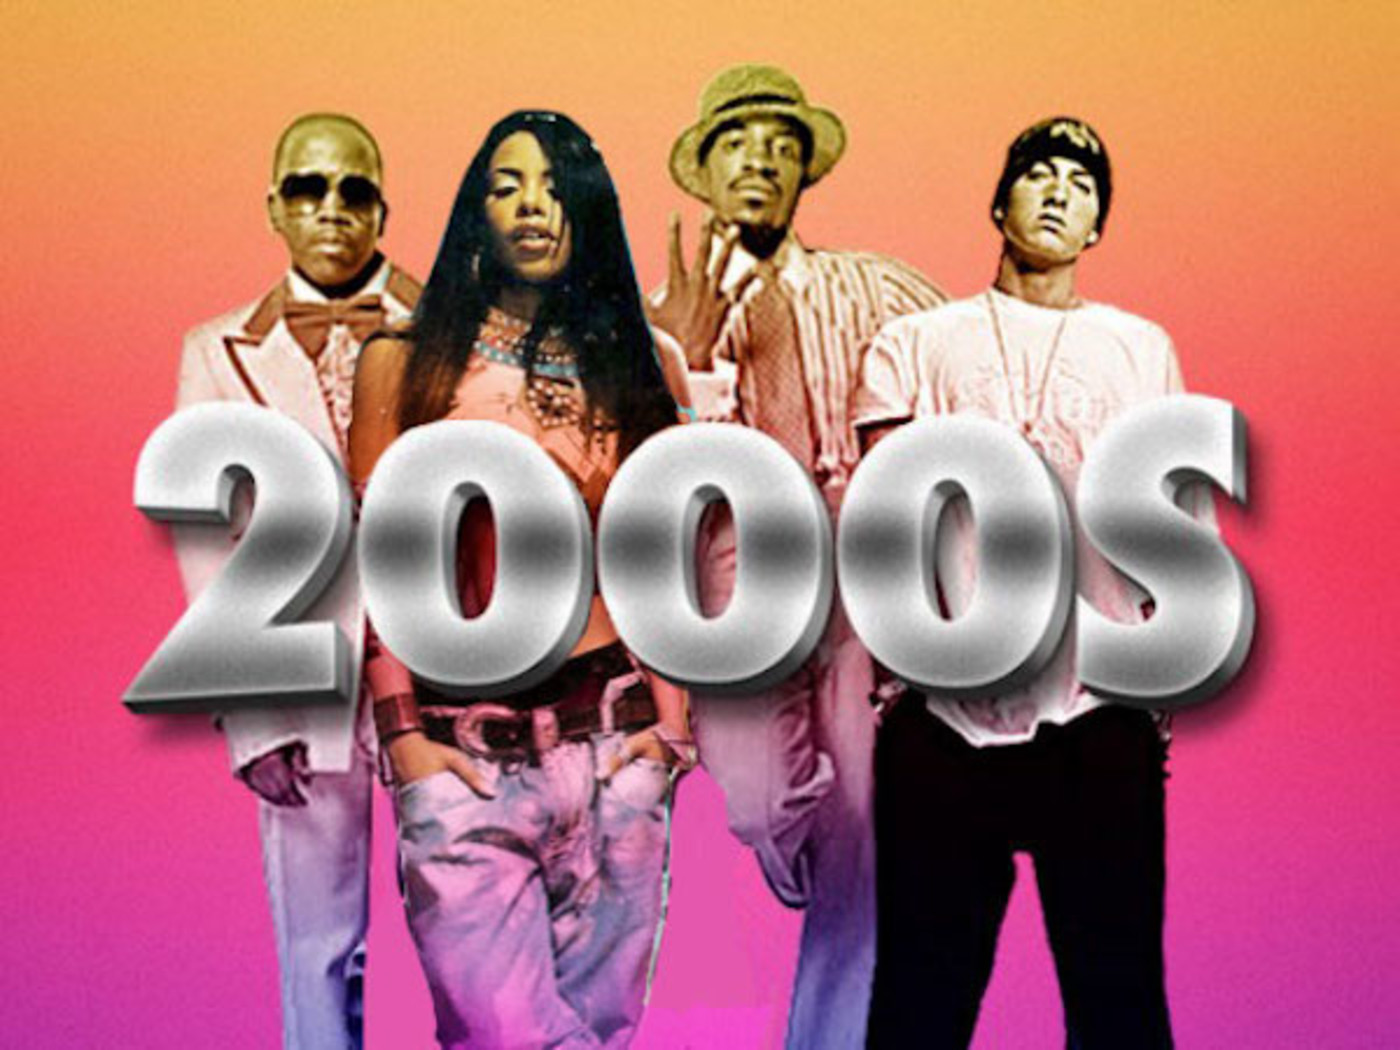 Песни 2008 зарубежные. S2000. 2000s Music. 2000s years. Pop Music 2000s.